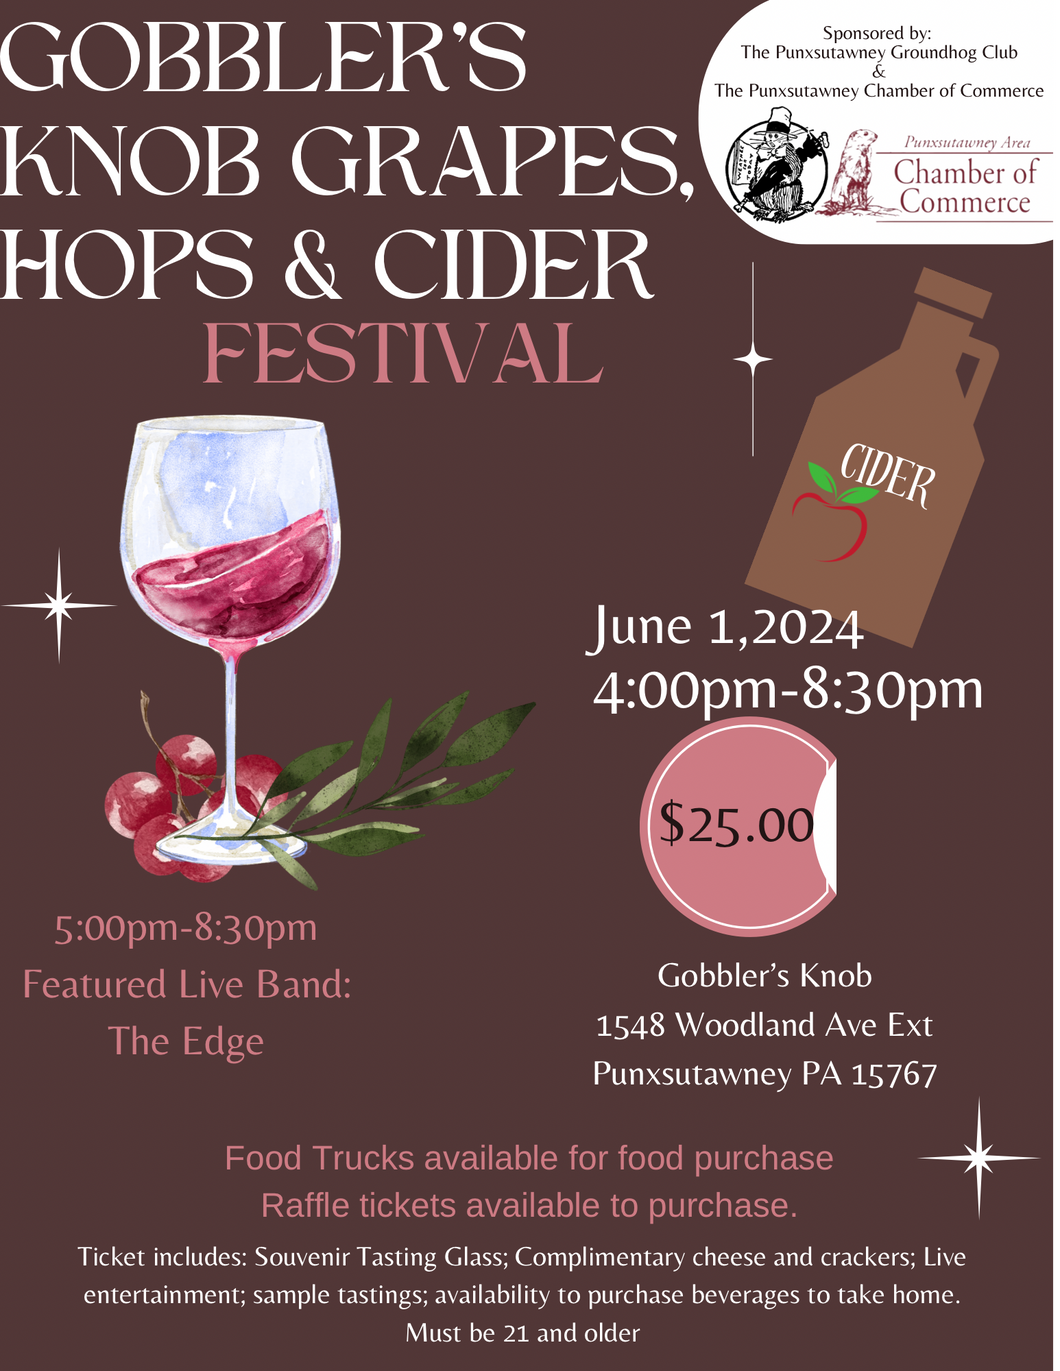 Gobbler’s Knob Grapes, Hops & Cider Festival 2024